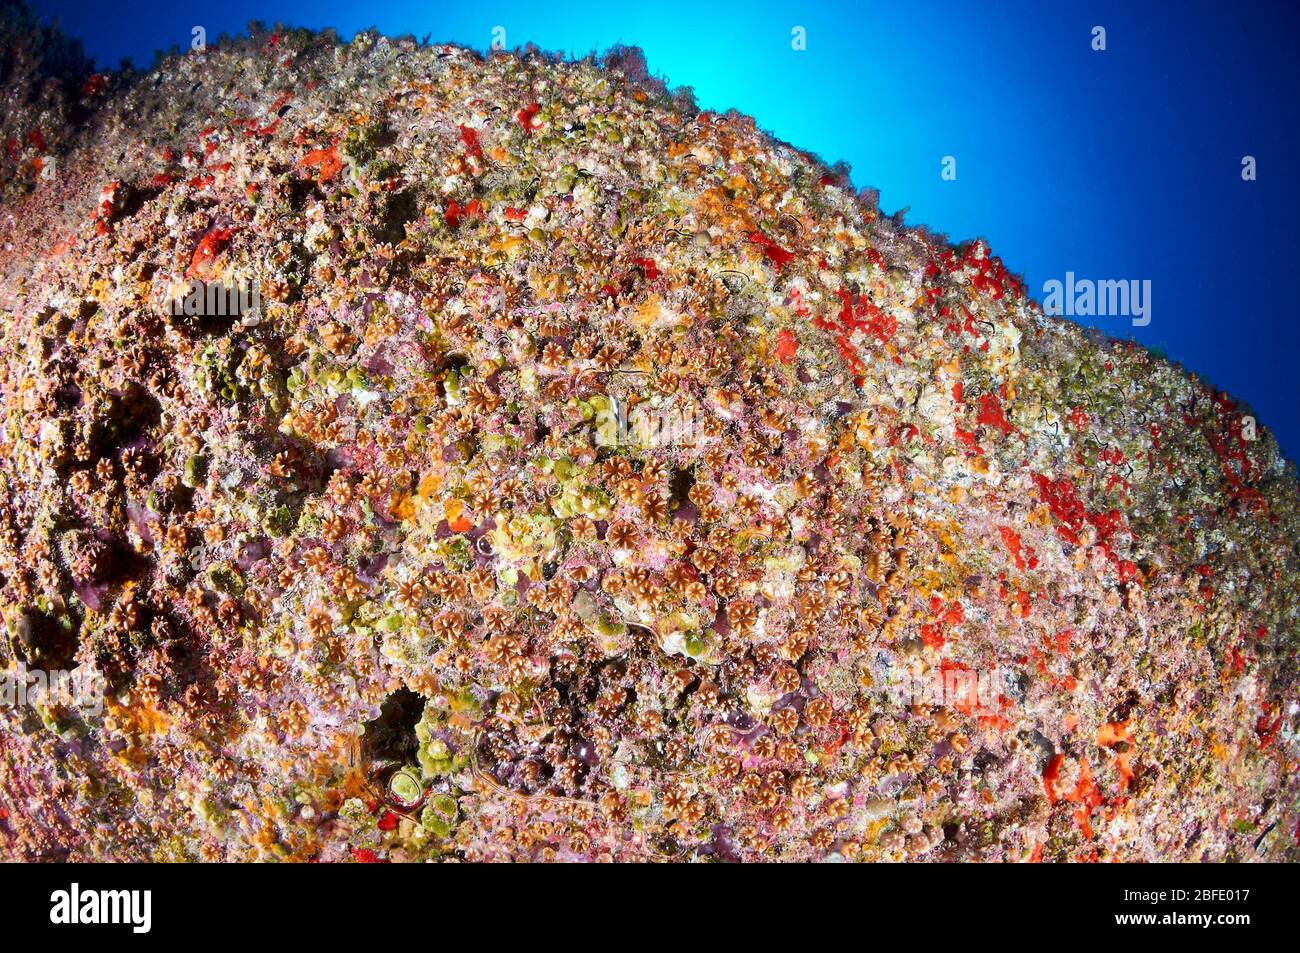 Stony coral Polycyathus muellerae colony and encrusting marine life in an overhang in Atlantic ocean (La Palma, Canary Islands, Atlantic sea, Spain) Stock Photo